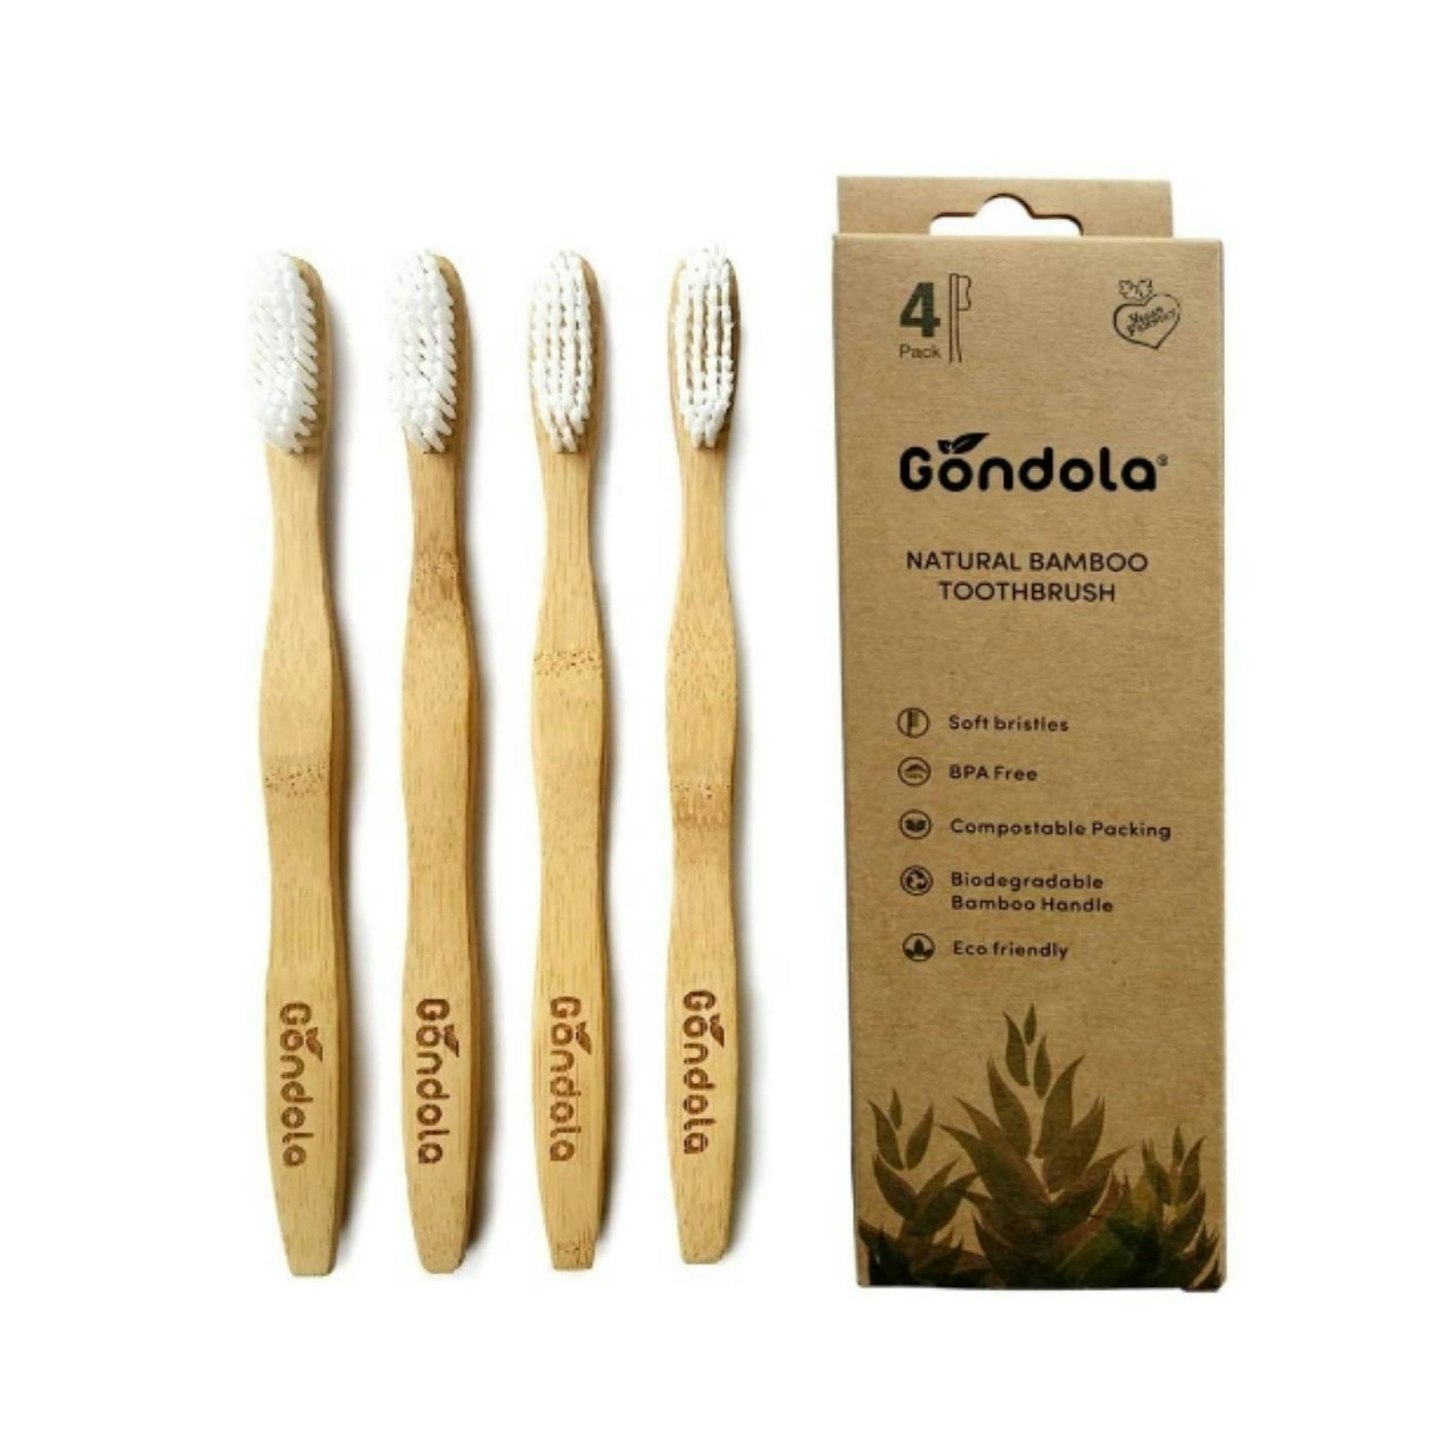 Gondola Organic Bamboo Toothbrushes and box